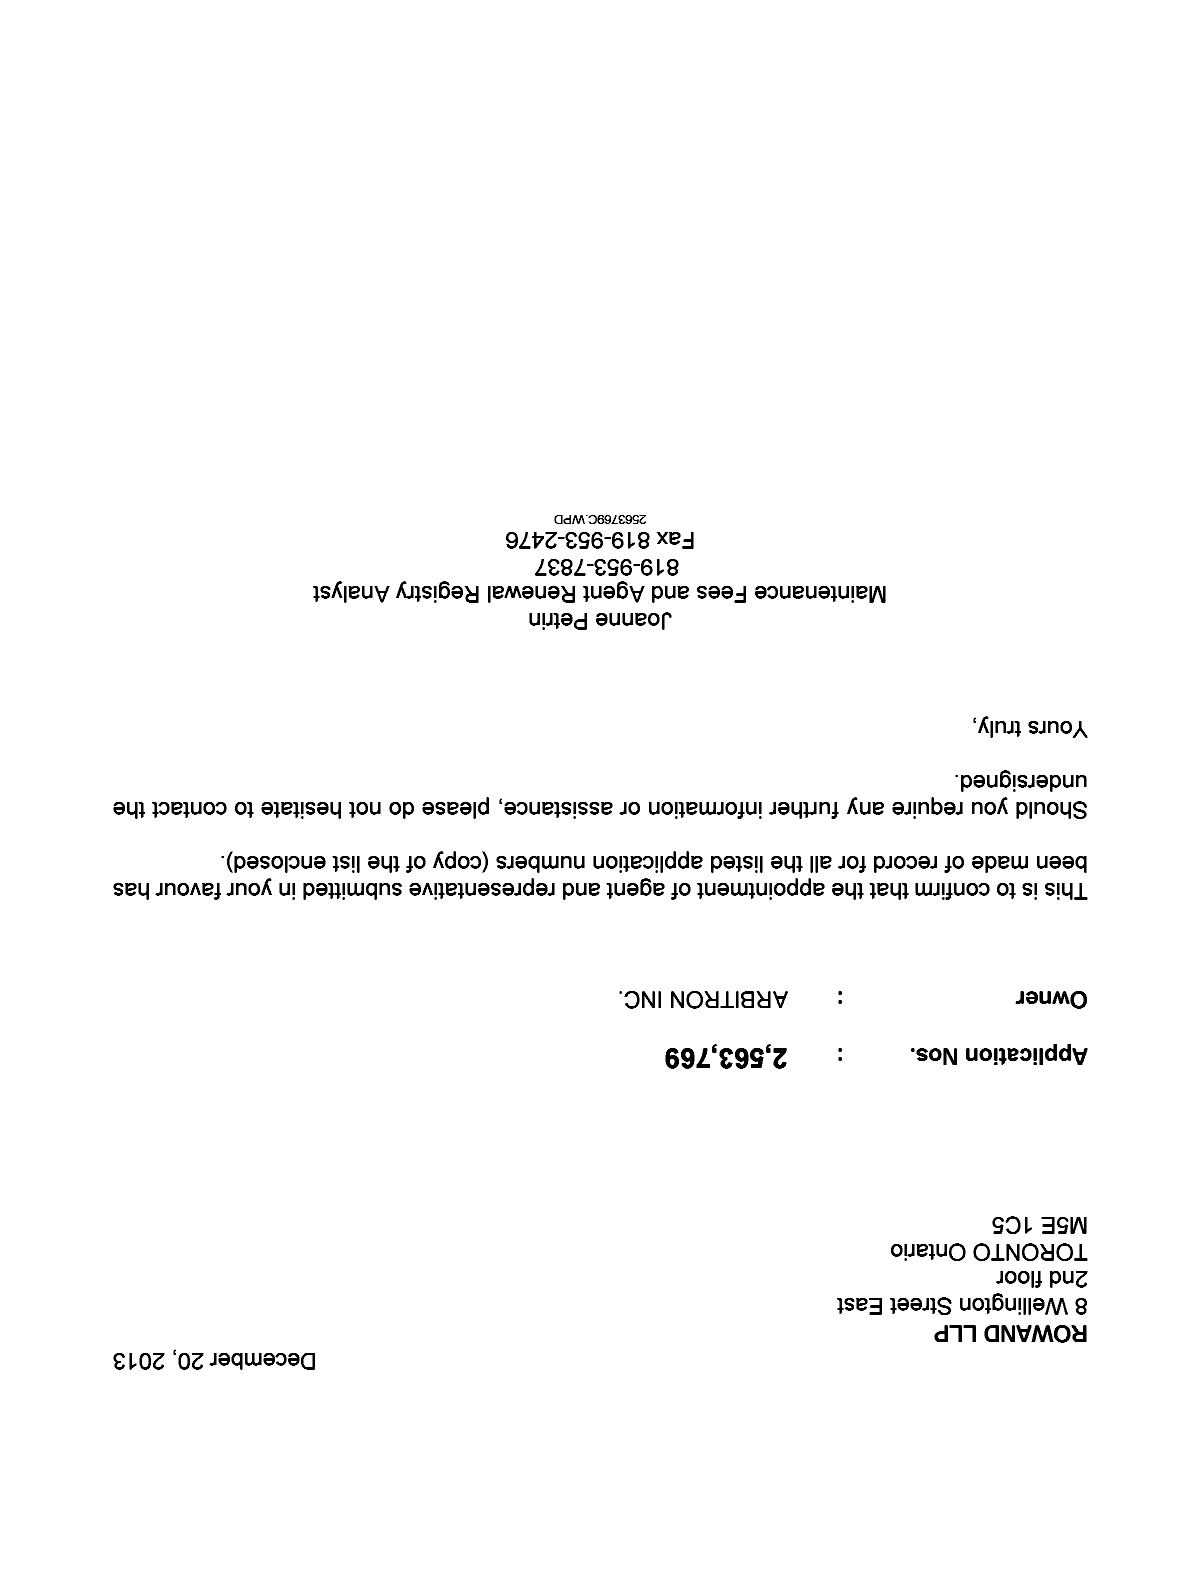 Canadian Patent Document 2710836. Correspondence 20131220. Image 1 of 1